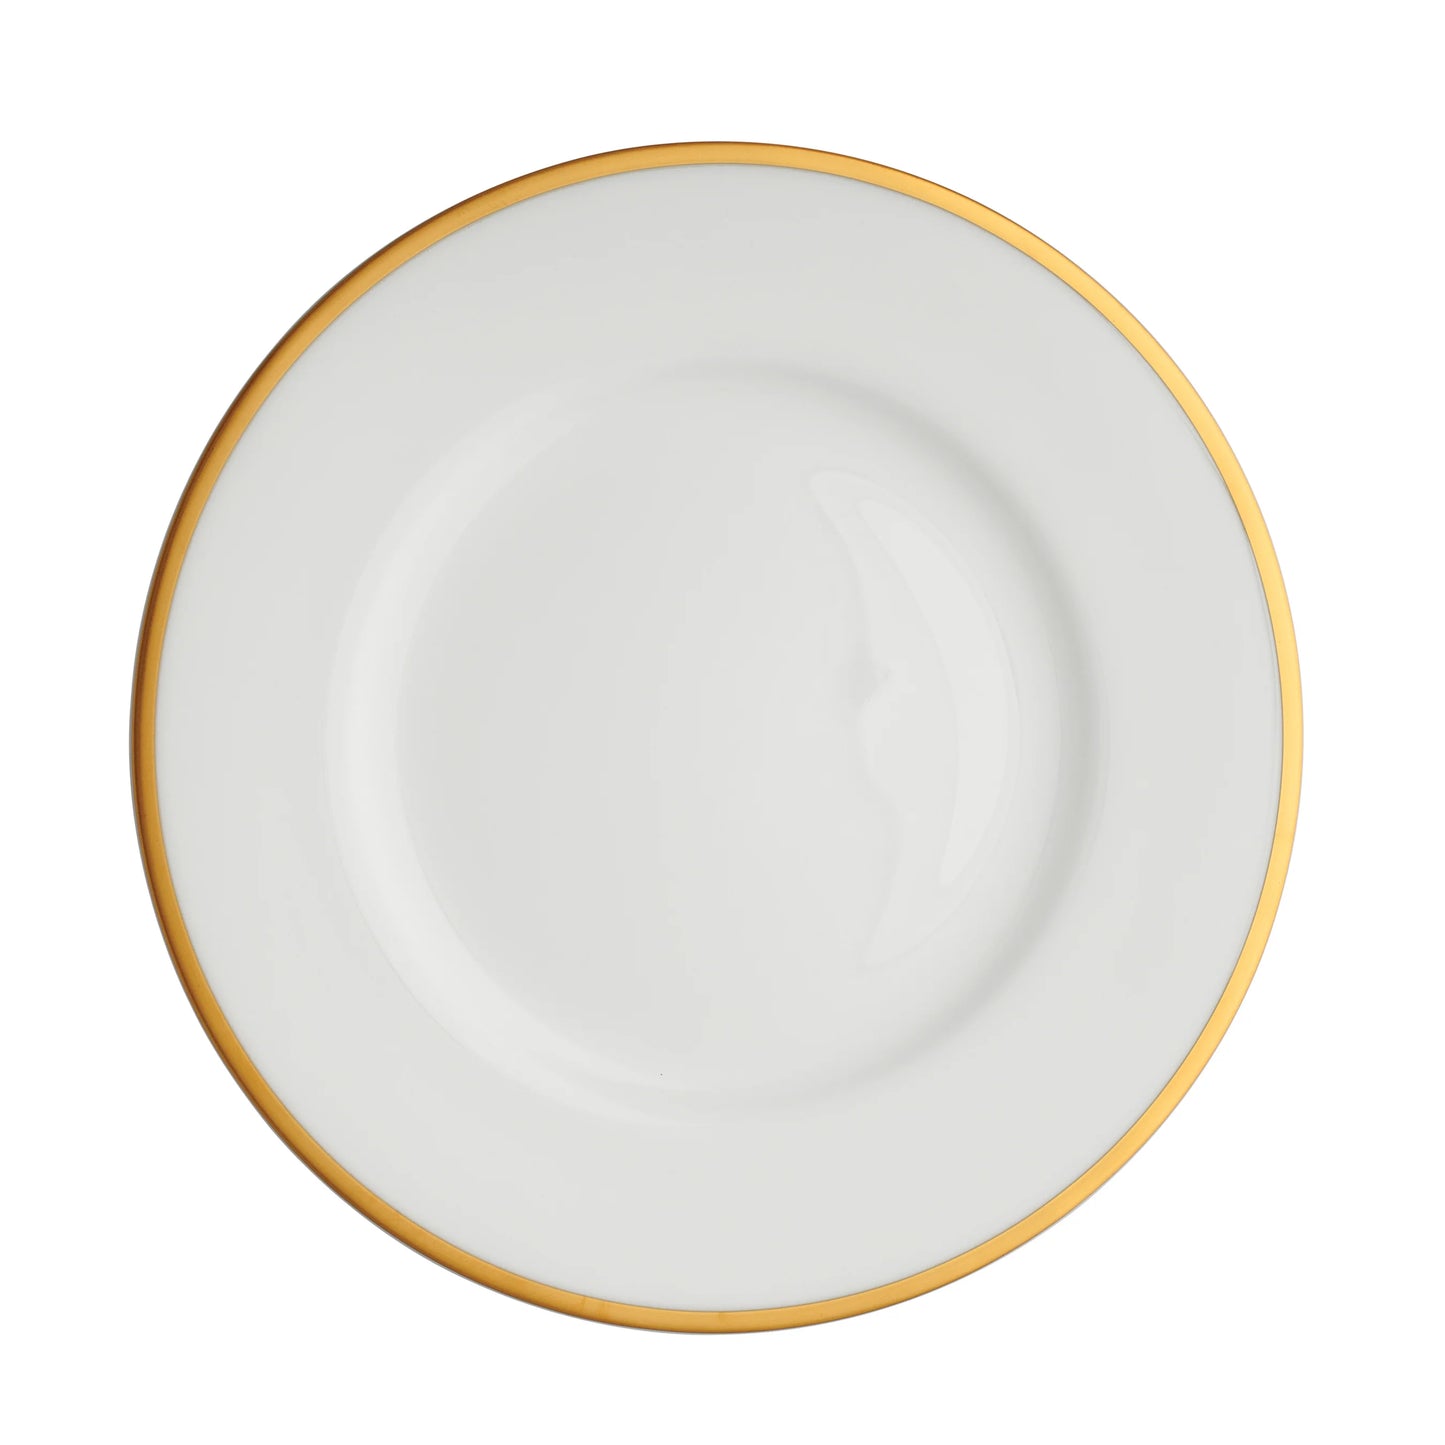 Comet Gold Dinner Plate